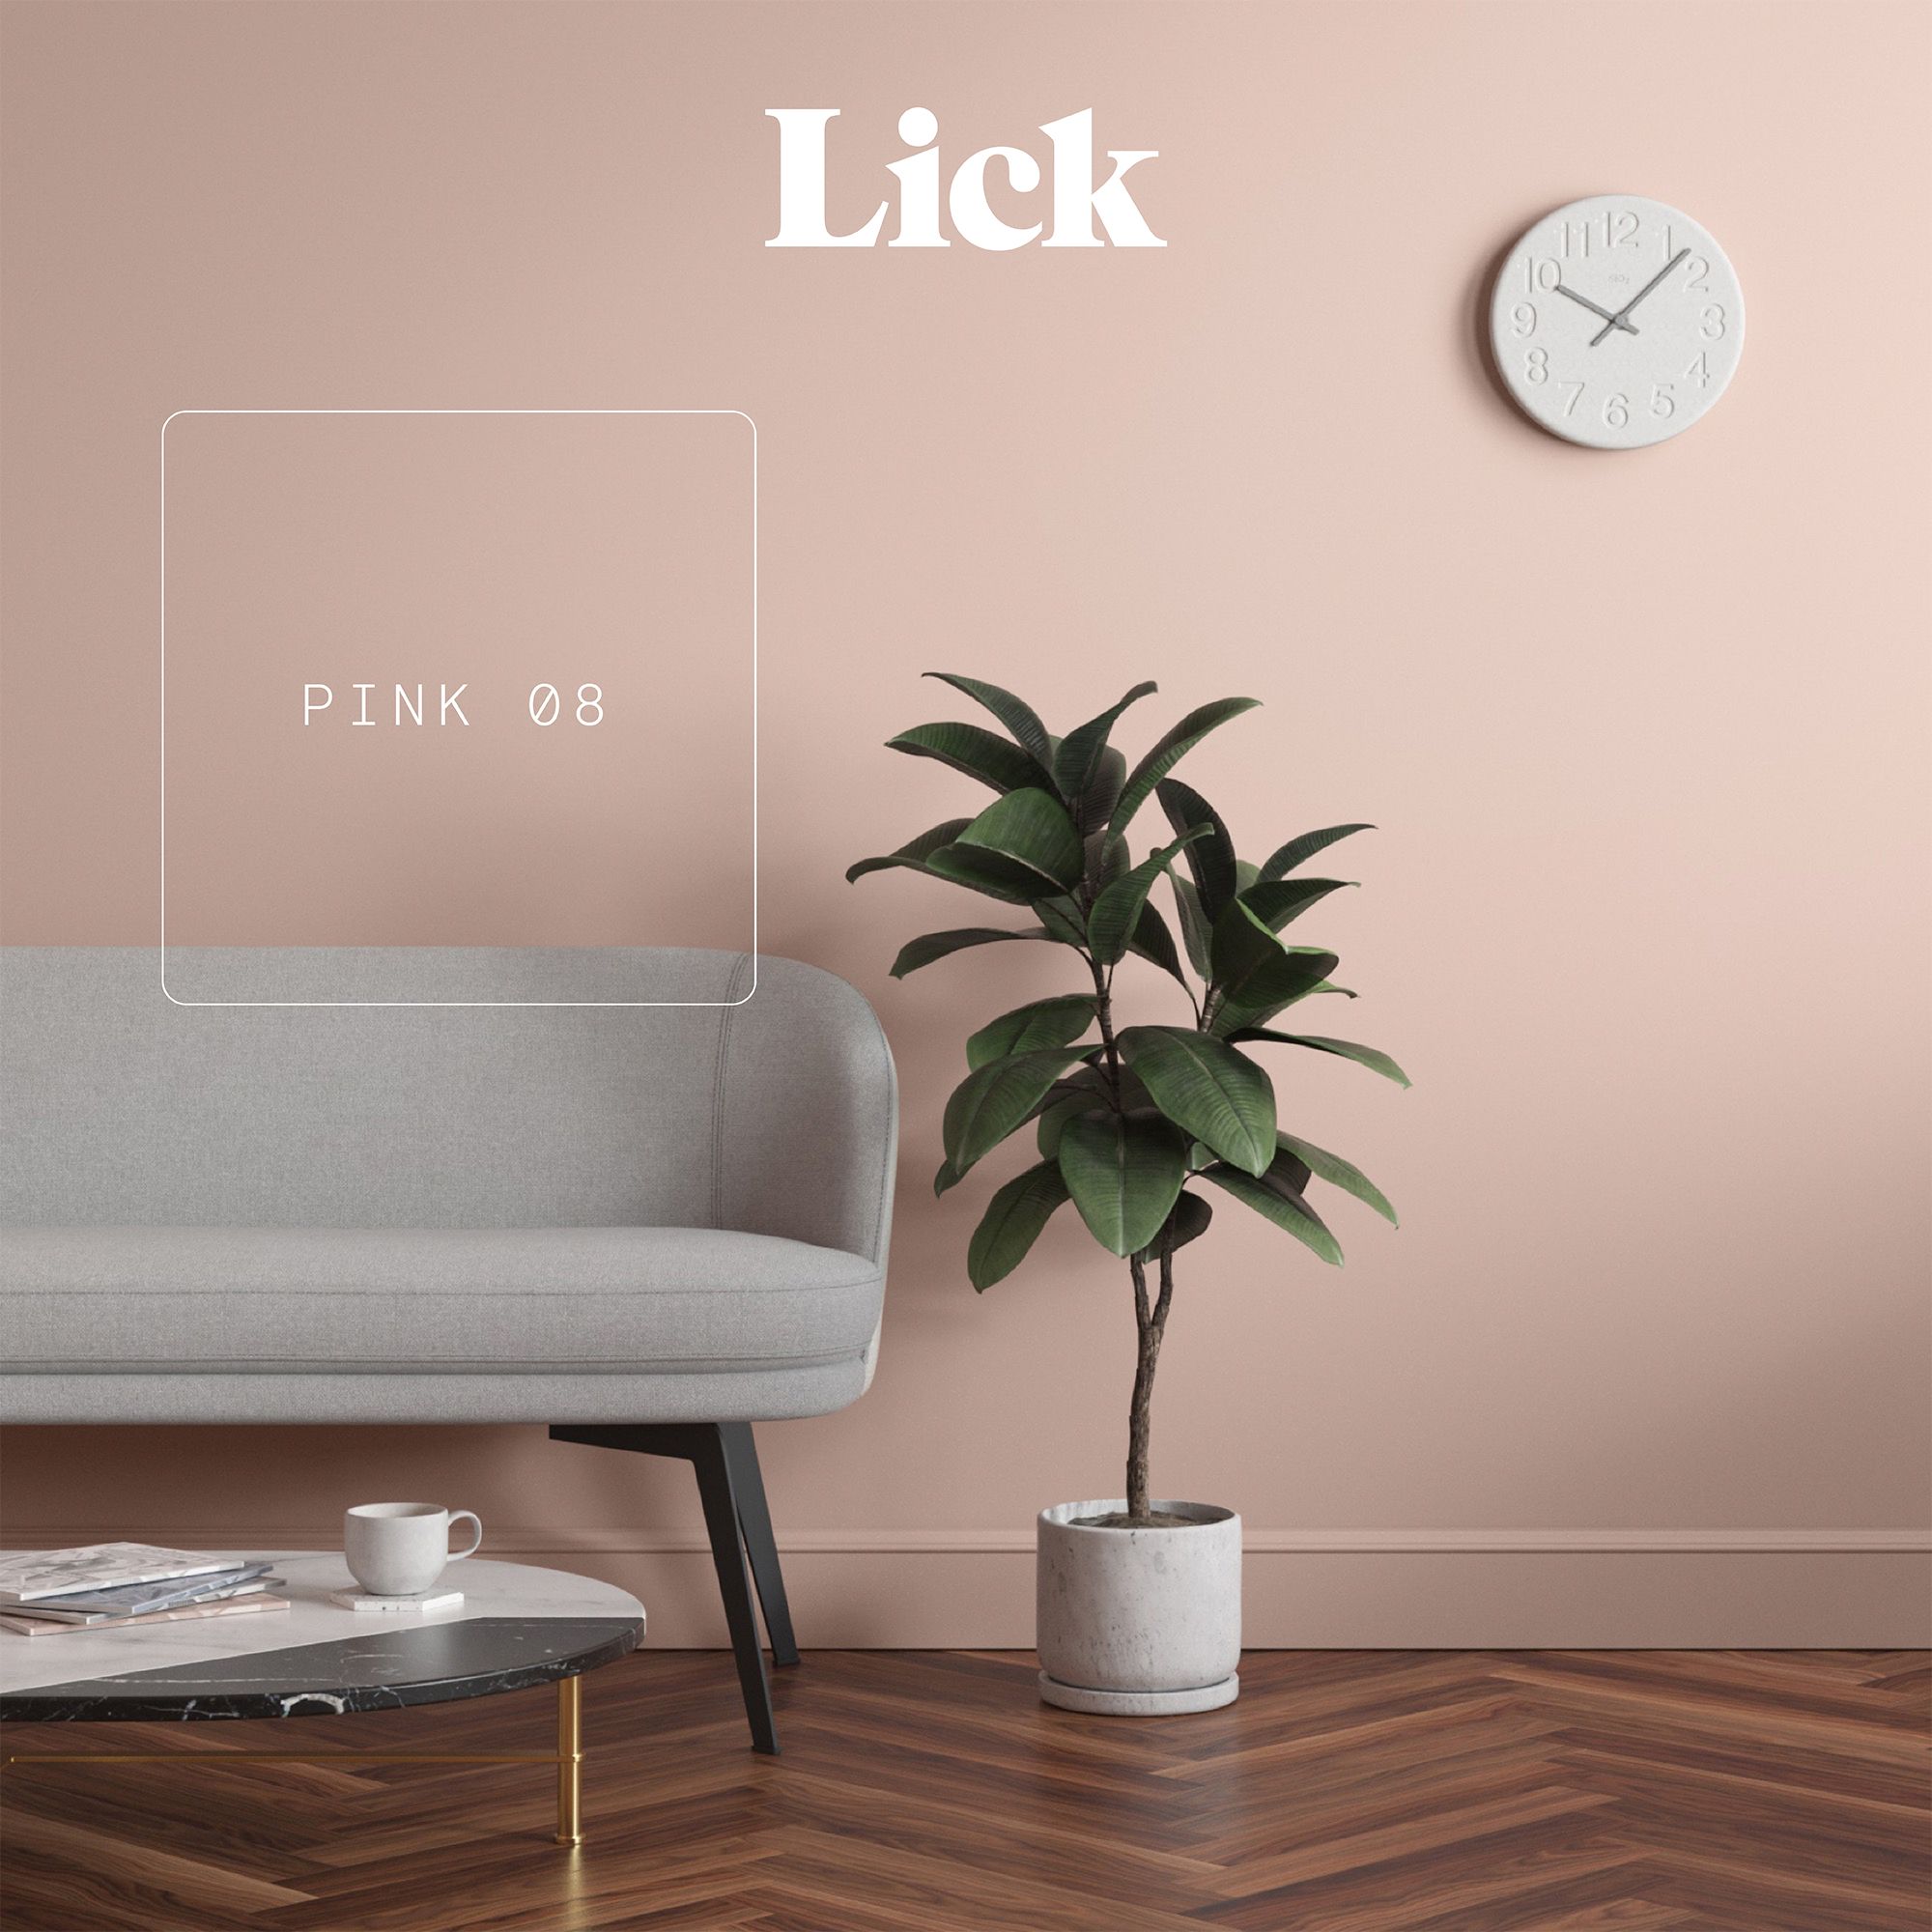 Lick Pink 08 Matt Emulsion paint, 2.5L